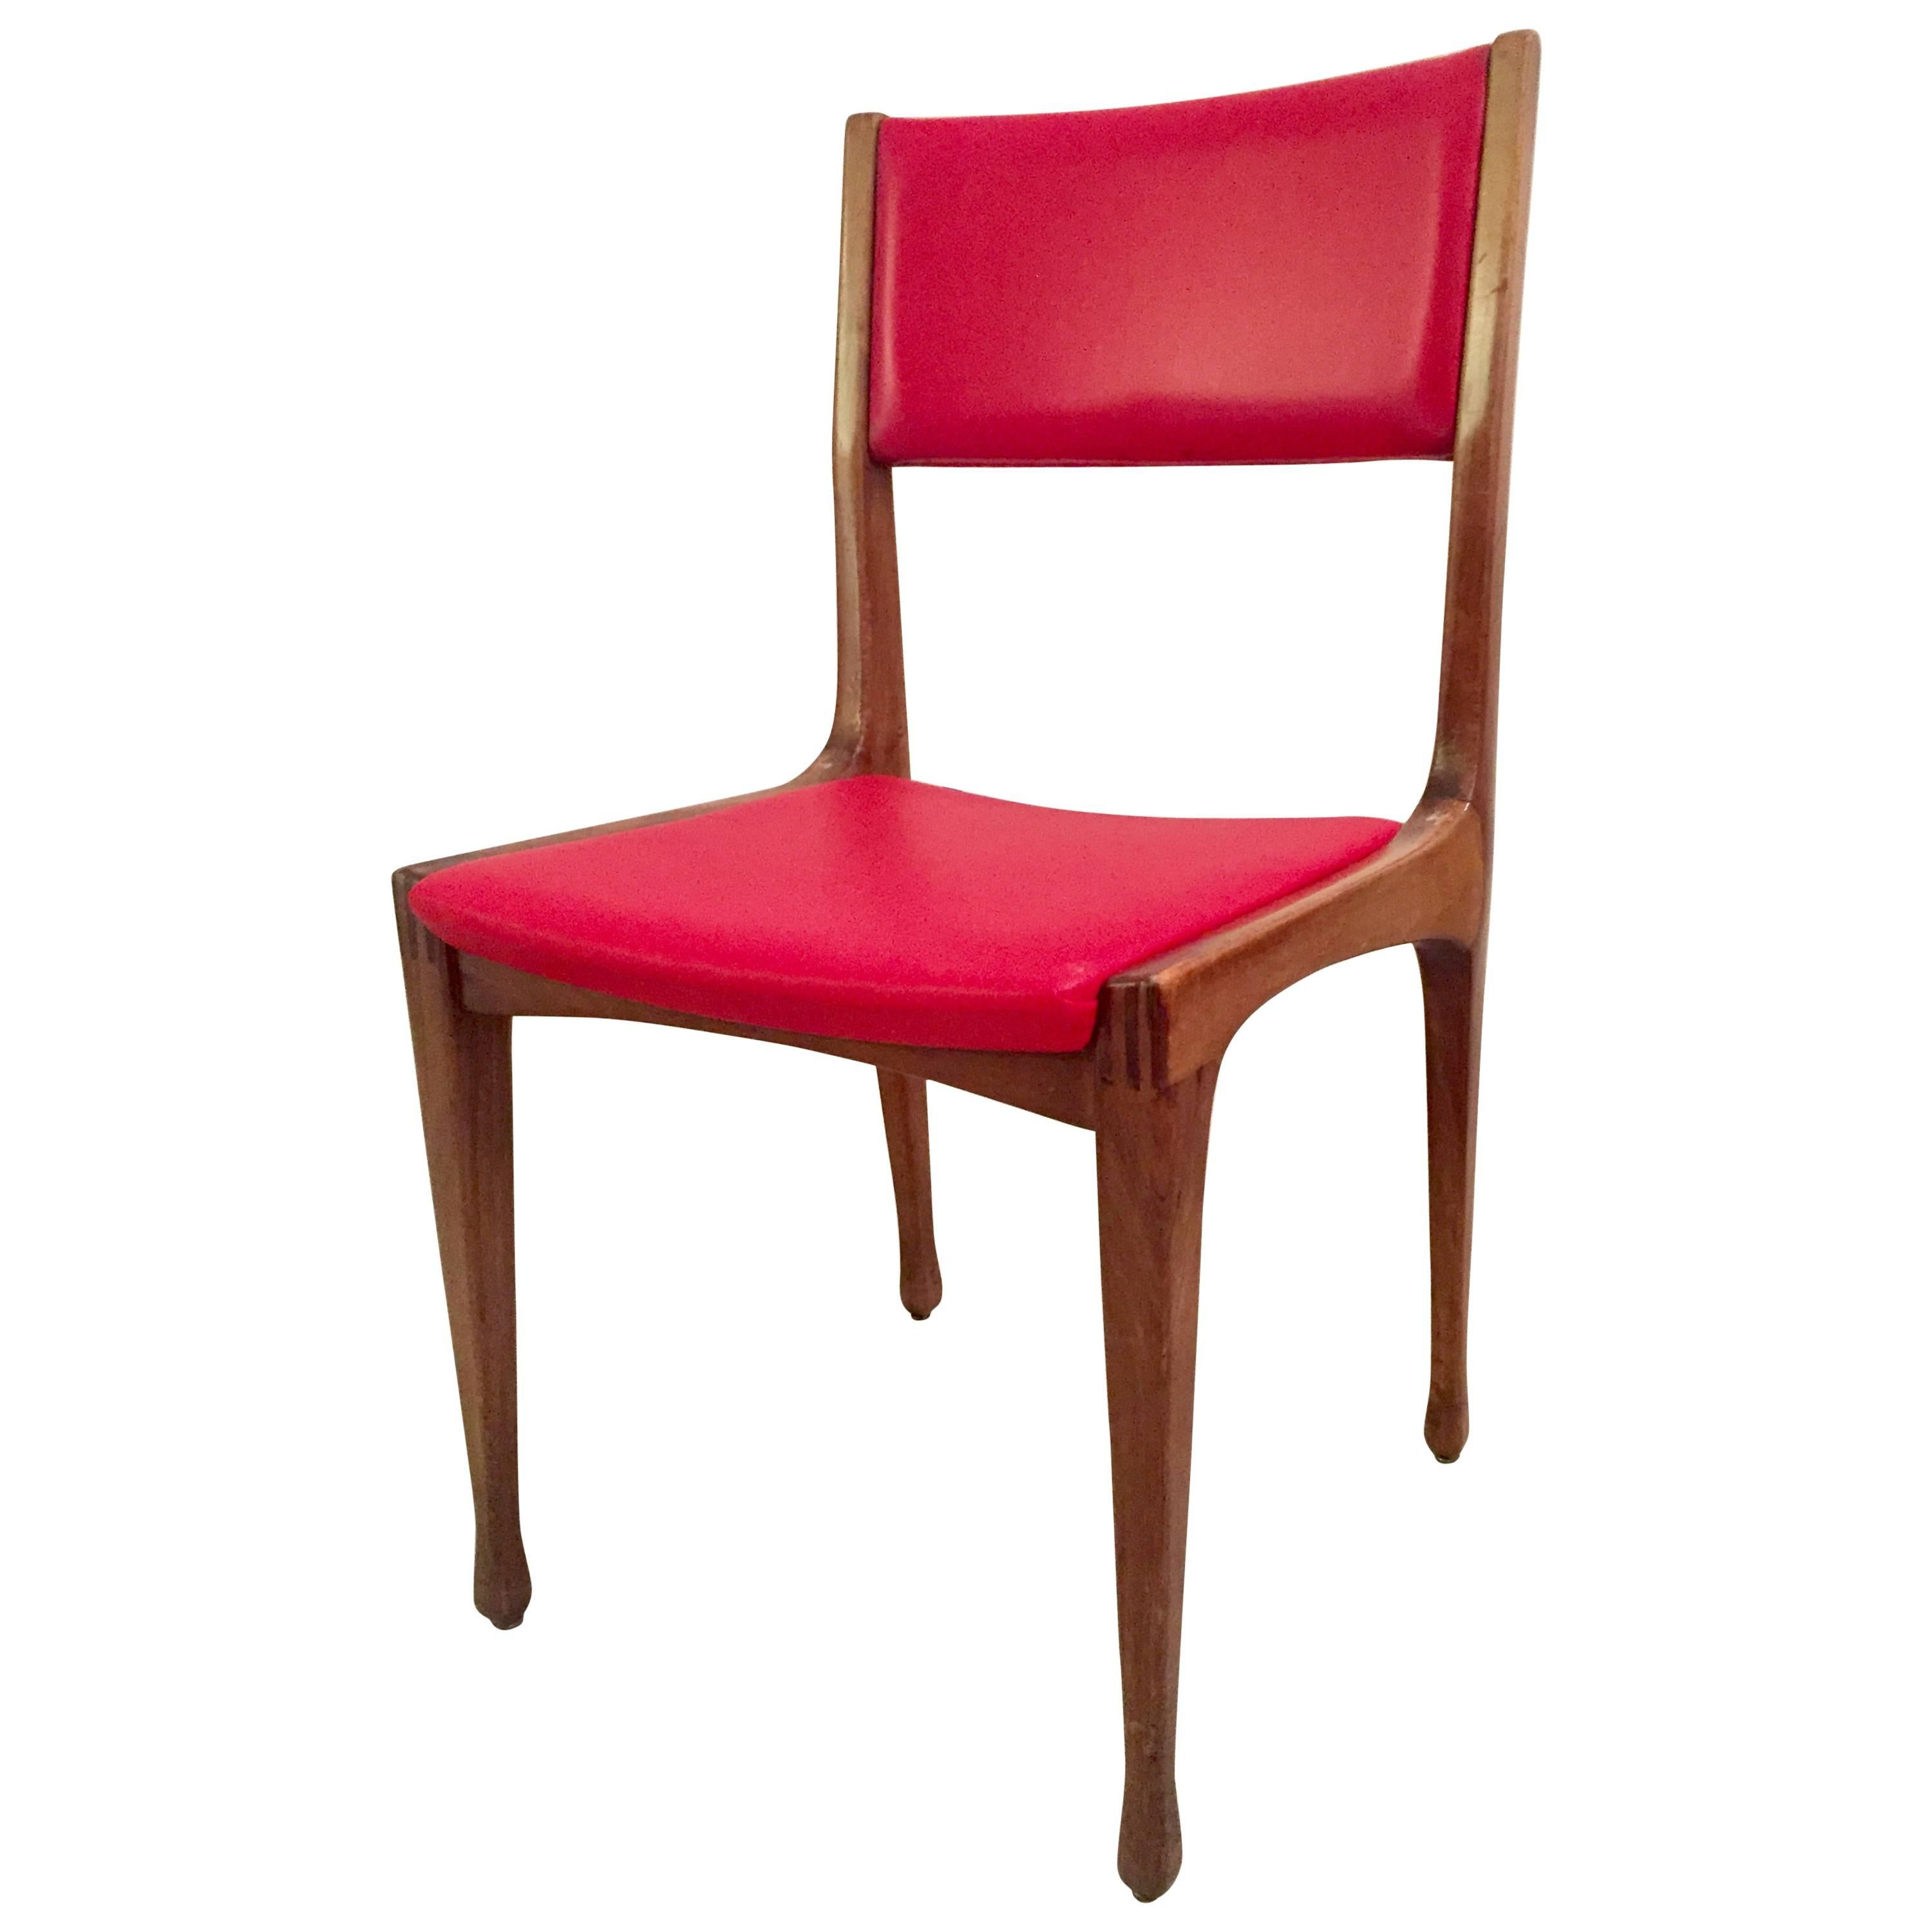 Rare Carlo De Carli Chairs Mod.693 for Cassina